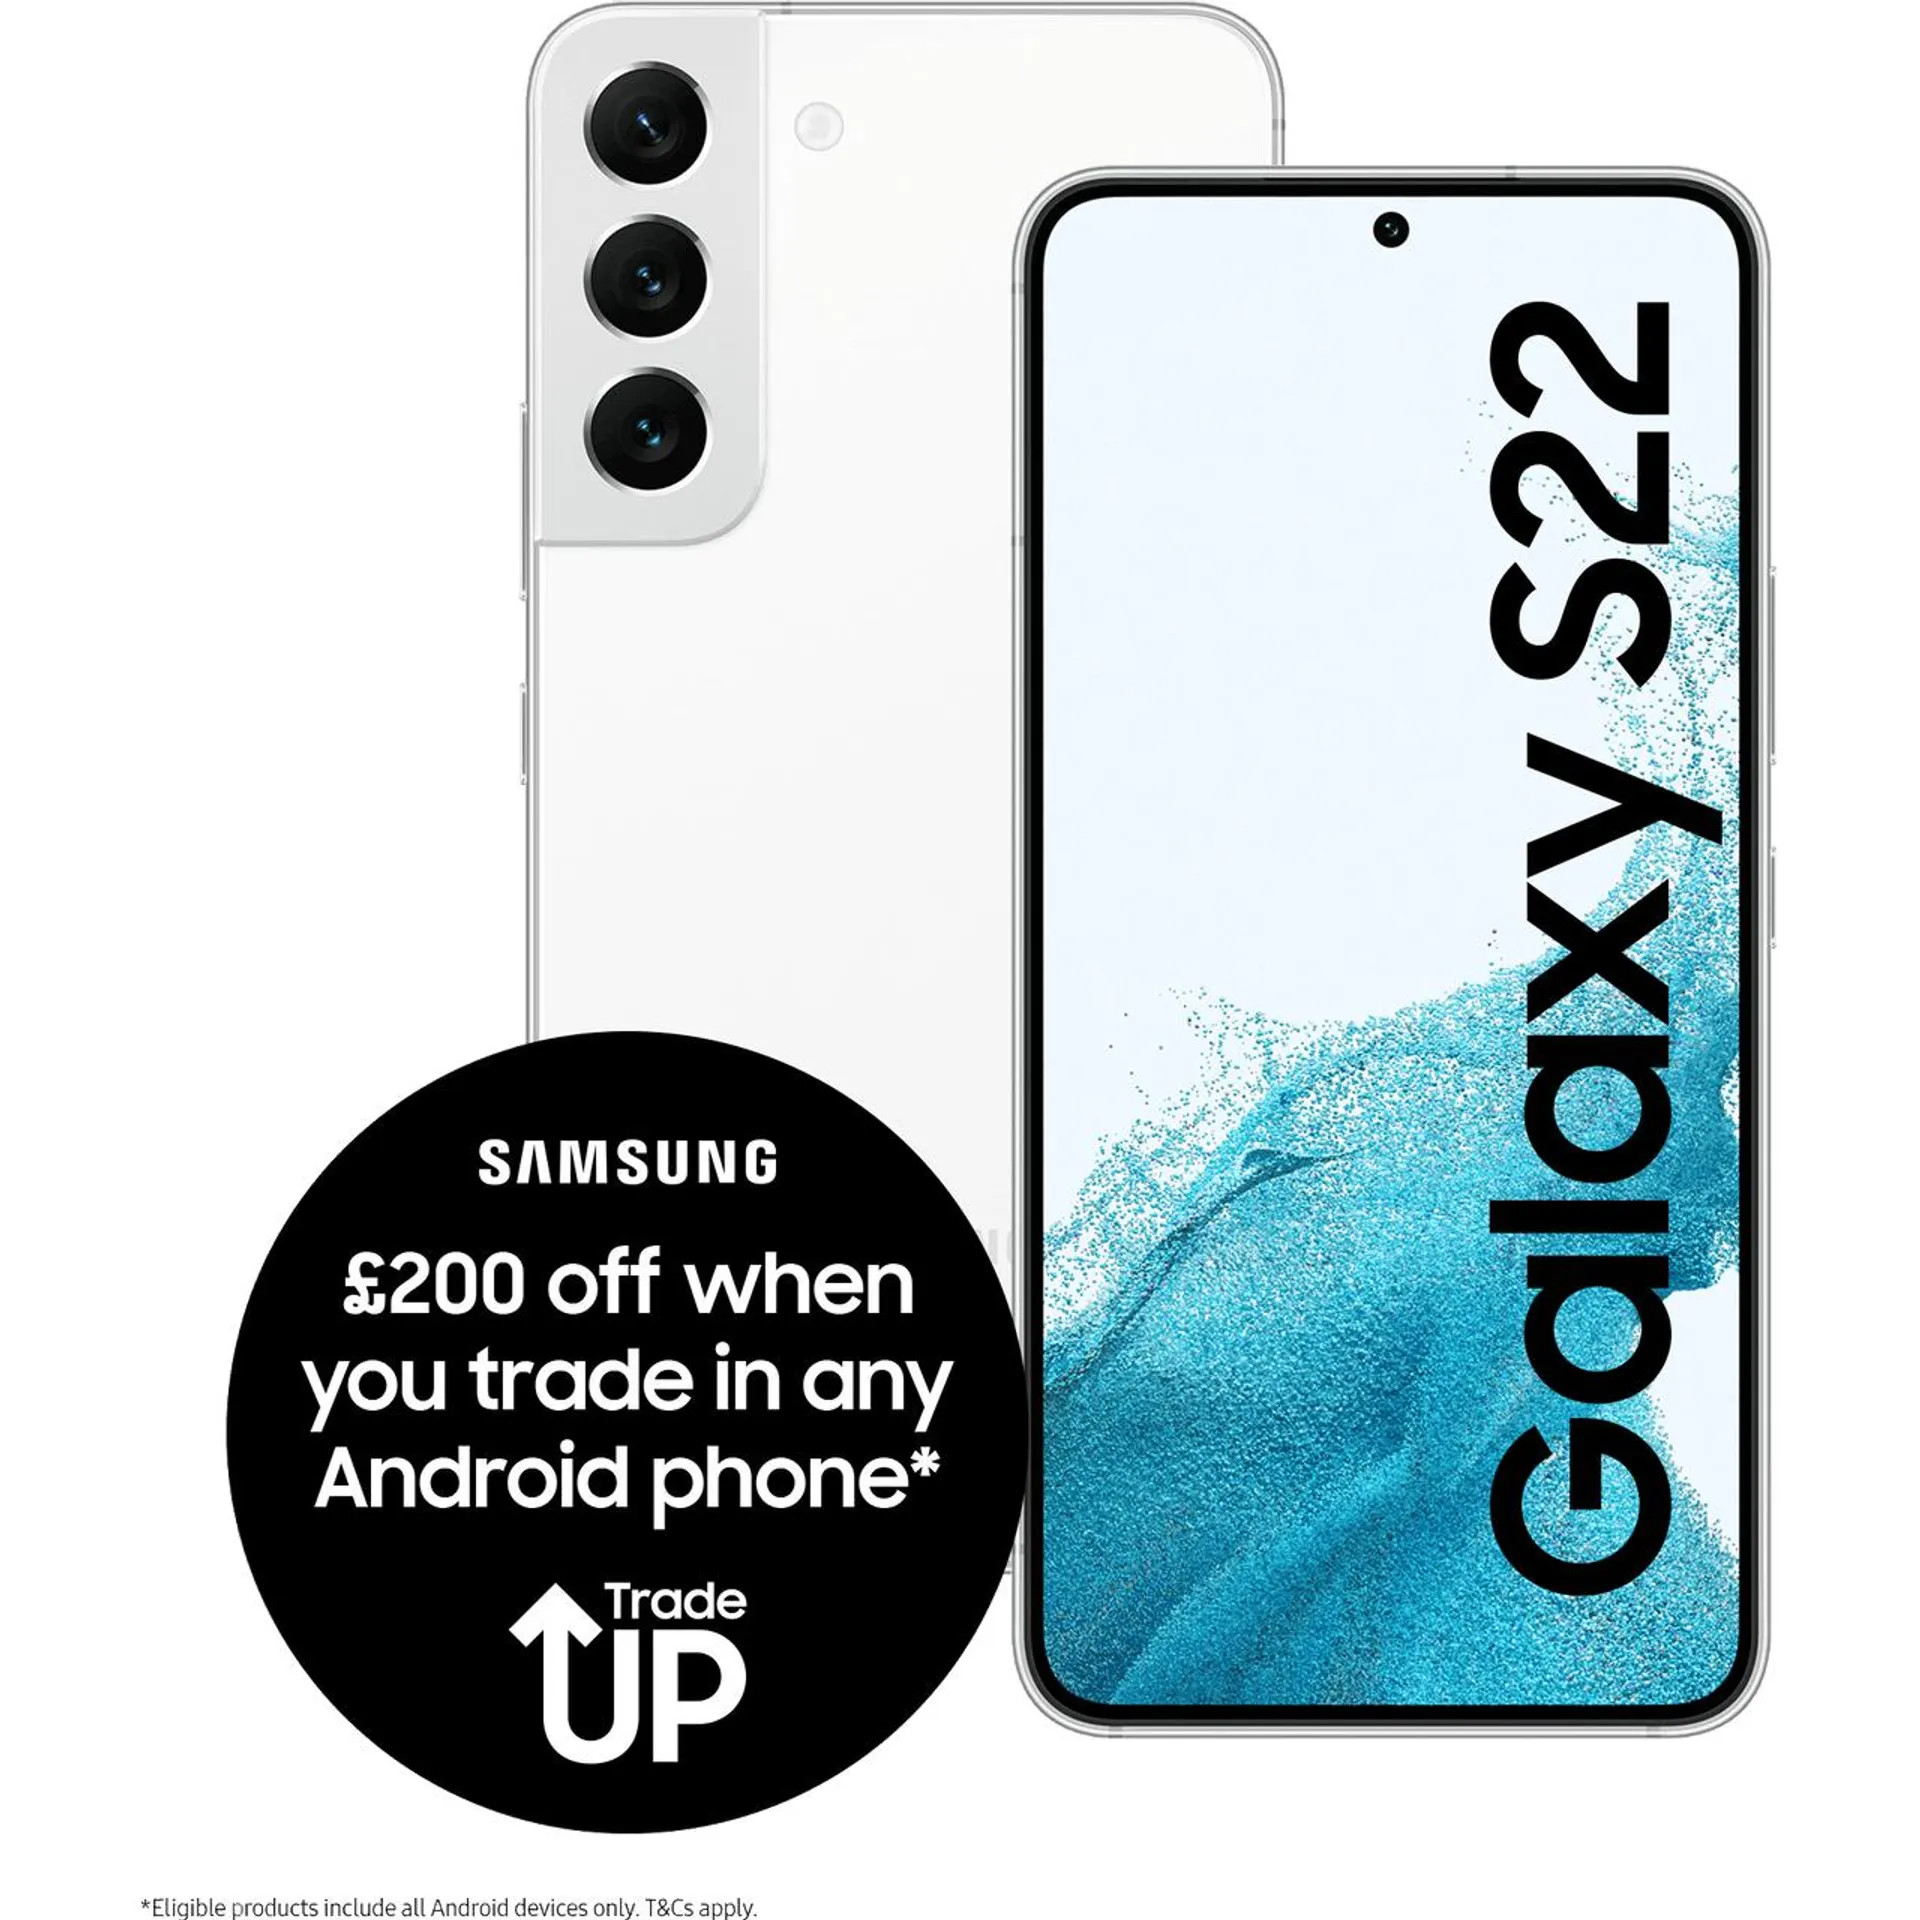 Samsung Galaxy S22 128GB Smartphone in Phantom White